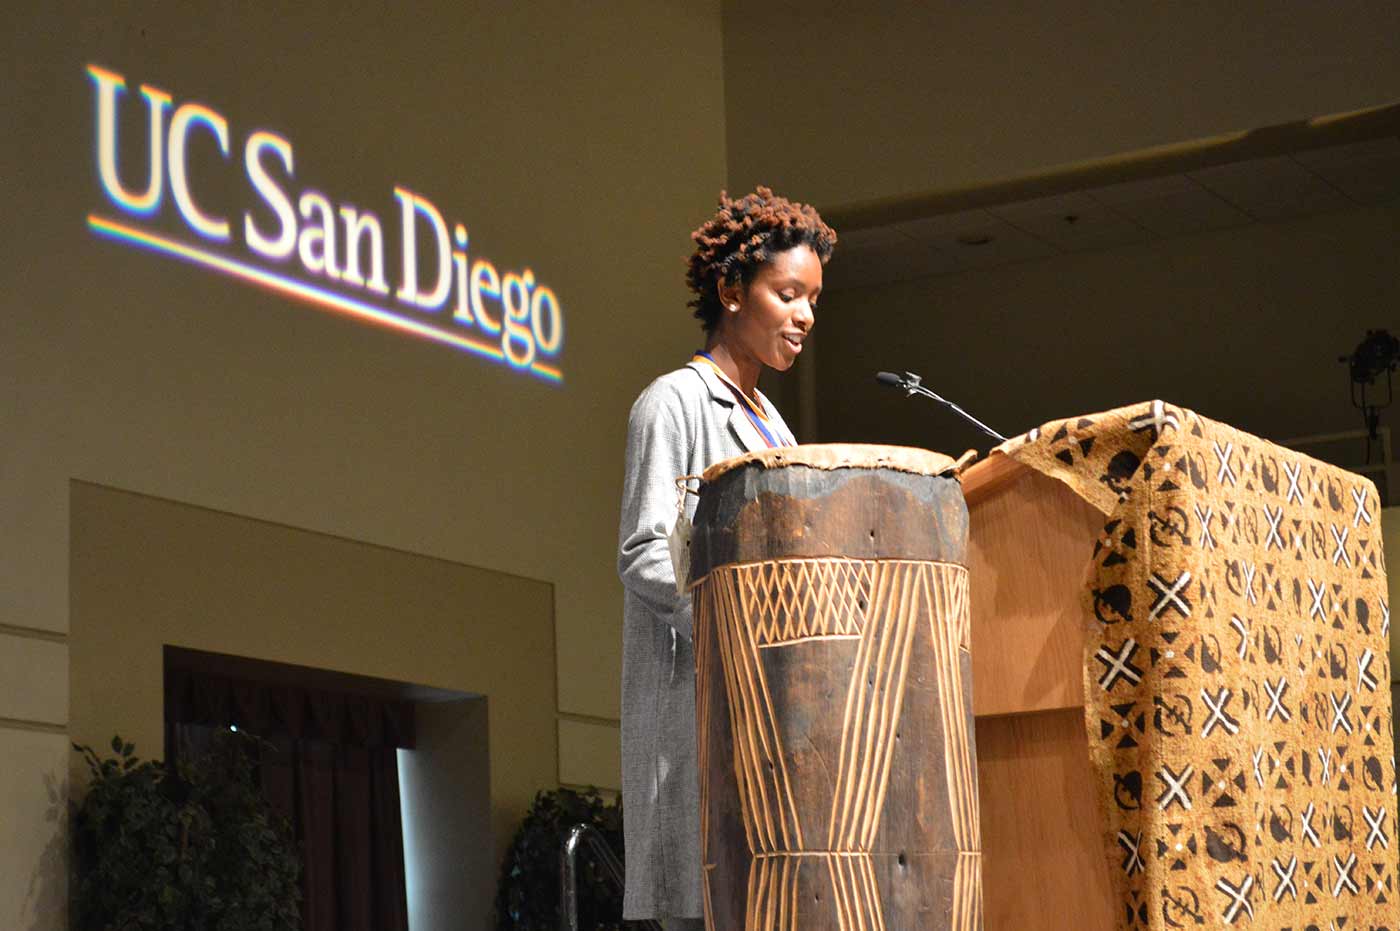 UC San Diego student at podium speaking